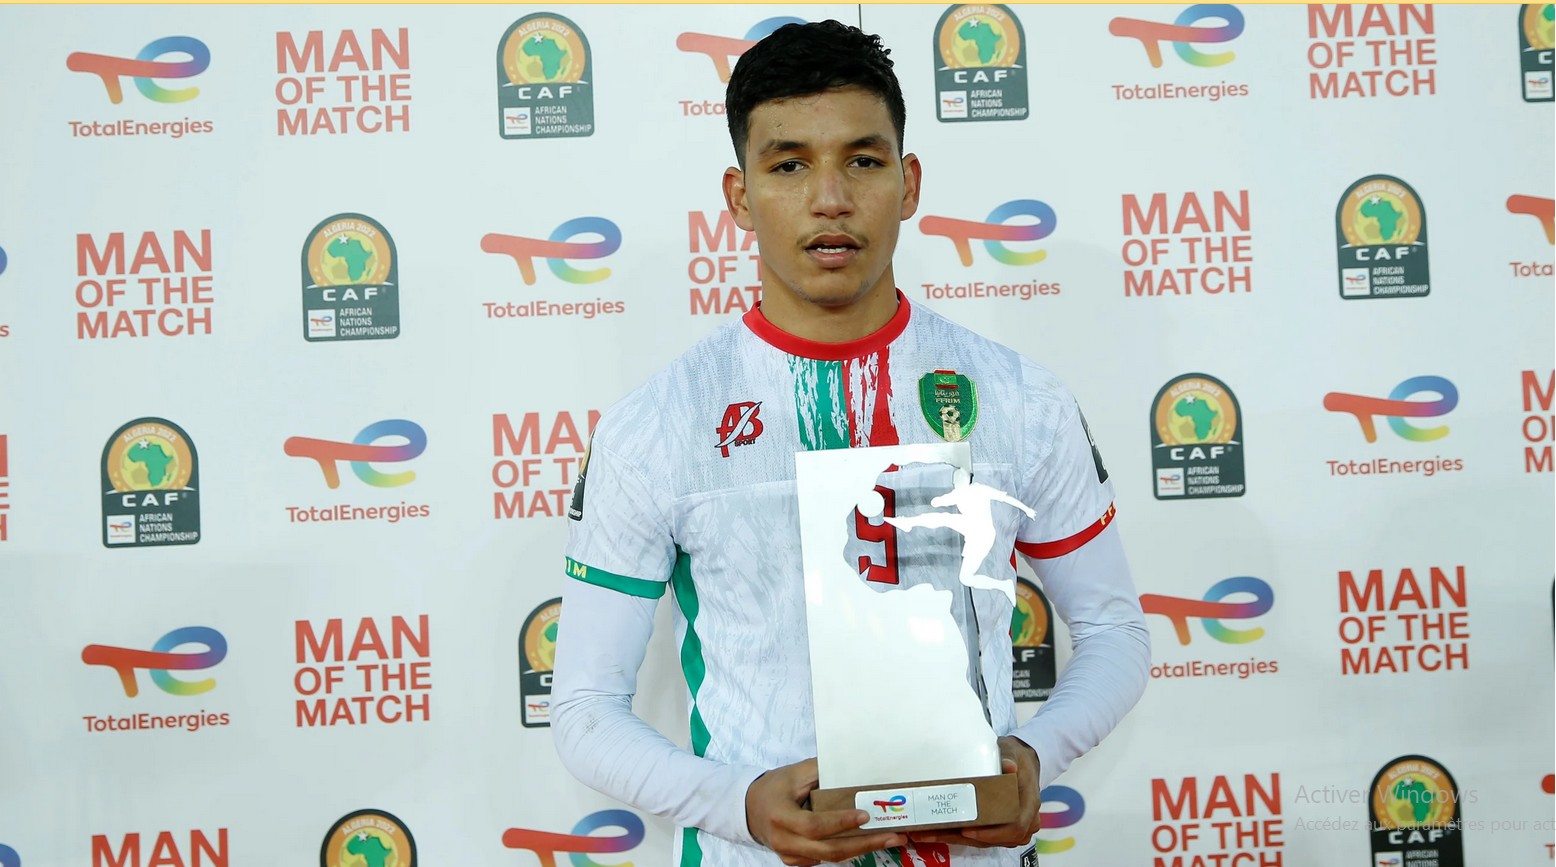 Désigné homme du match Mauritanie-Mali : Hemeya Tanji dédie son prix aux Mauritaniens 